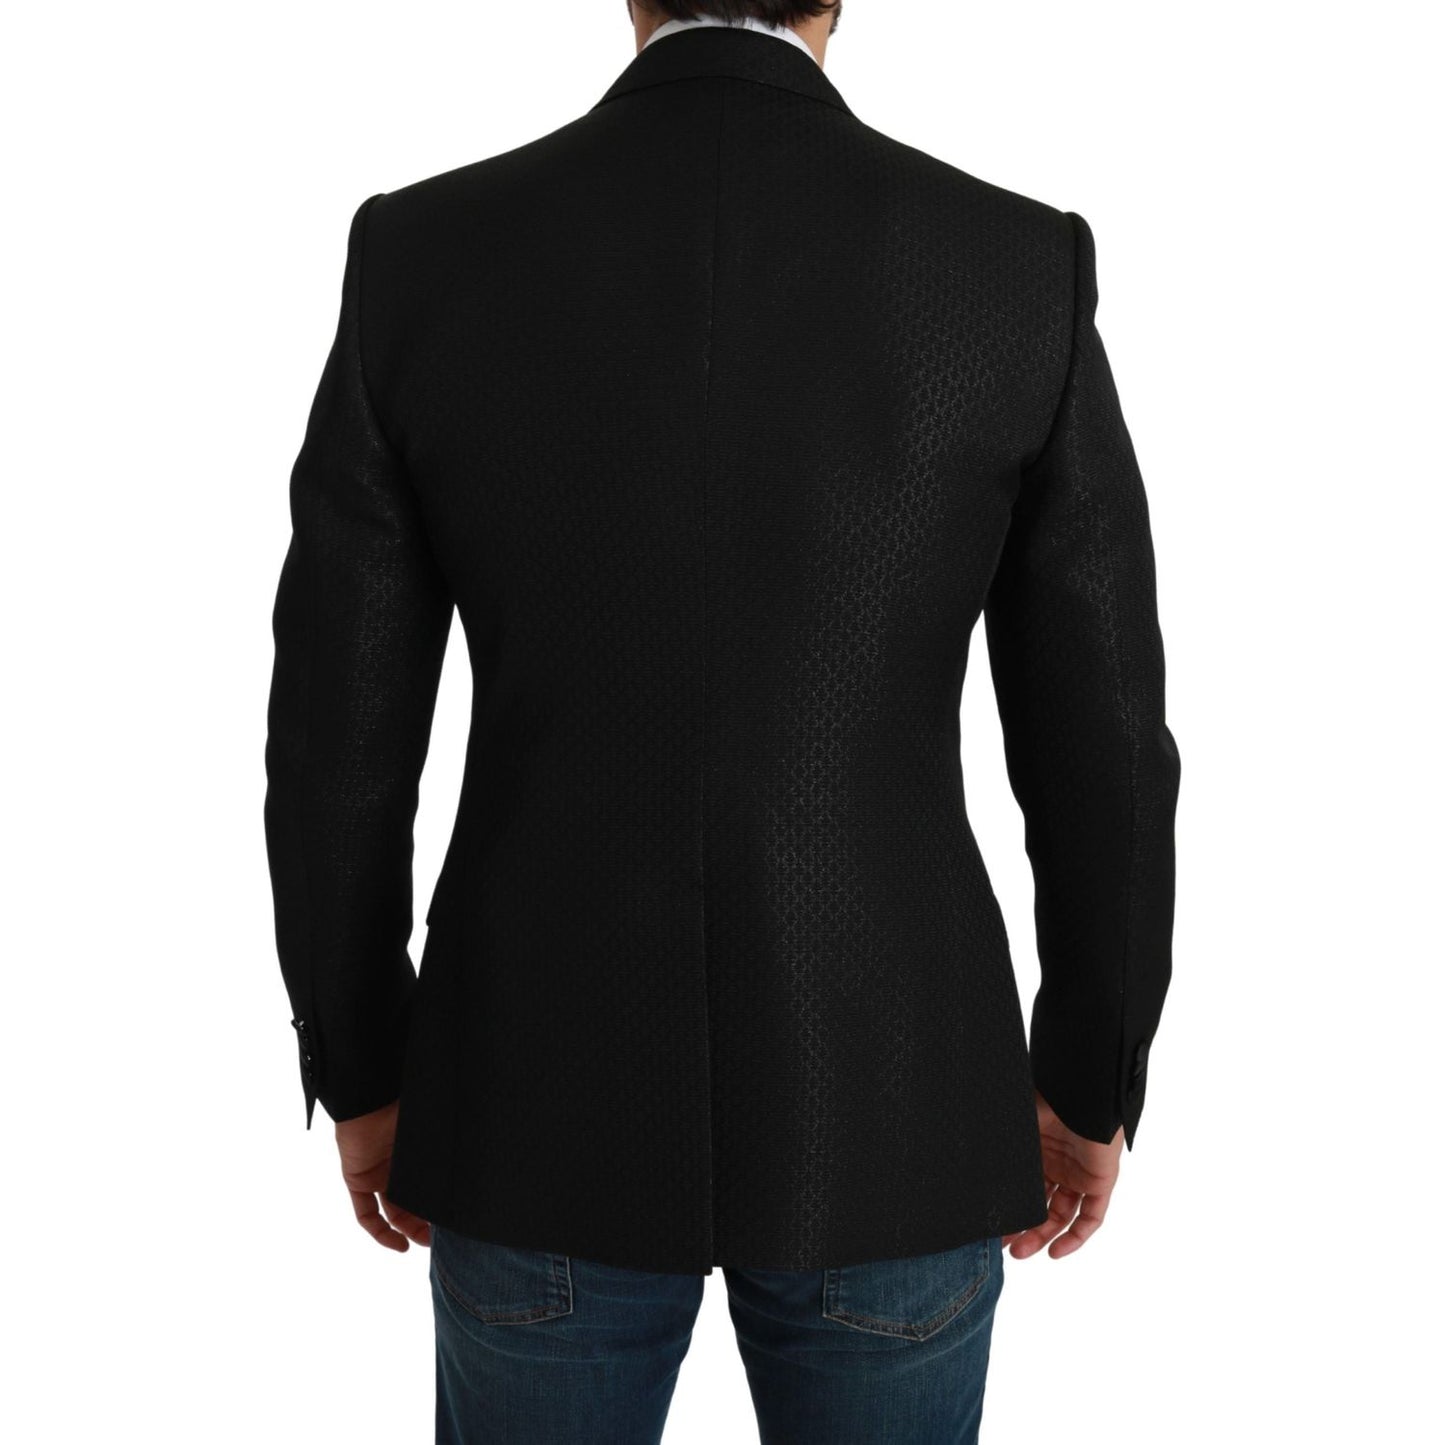 Dolce & Gabbana Slim Fit Martini Black Blazer Jacket Suit black-slim-fit-jacket-martini-blazer IMG_1015-scaled-c691172c-66e.jpg